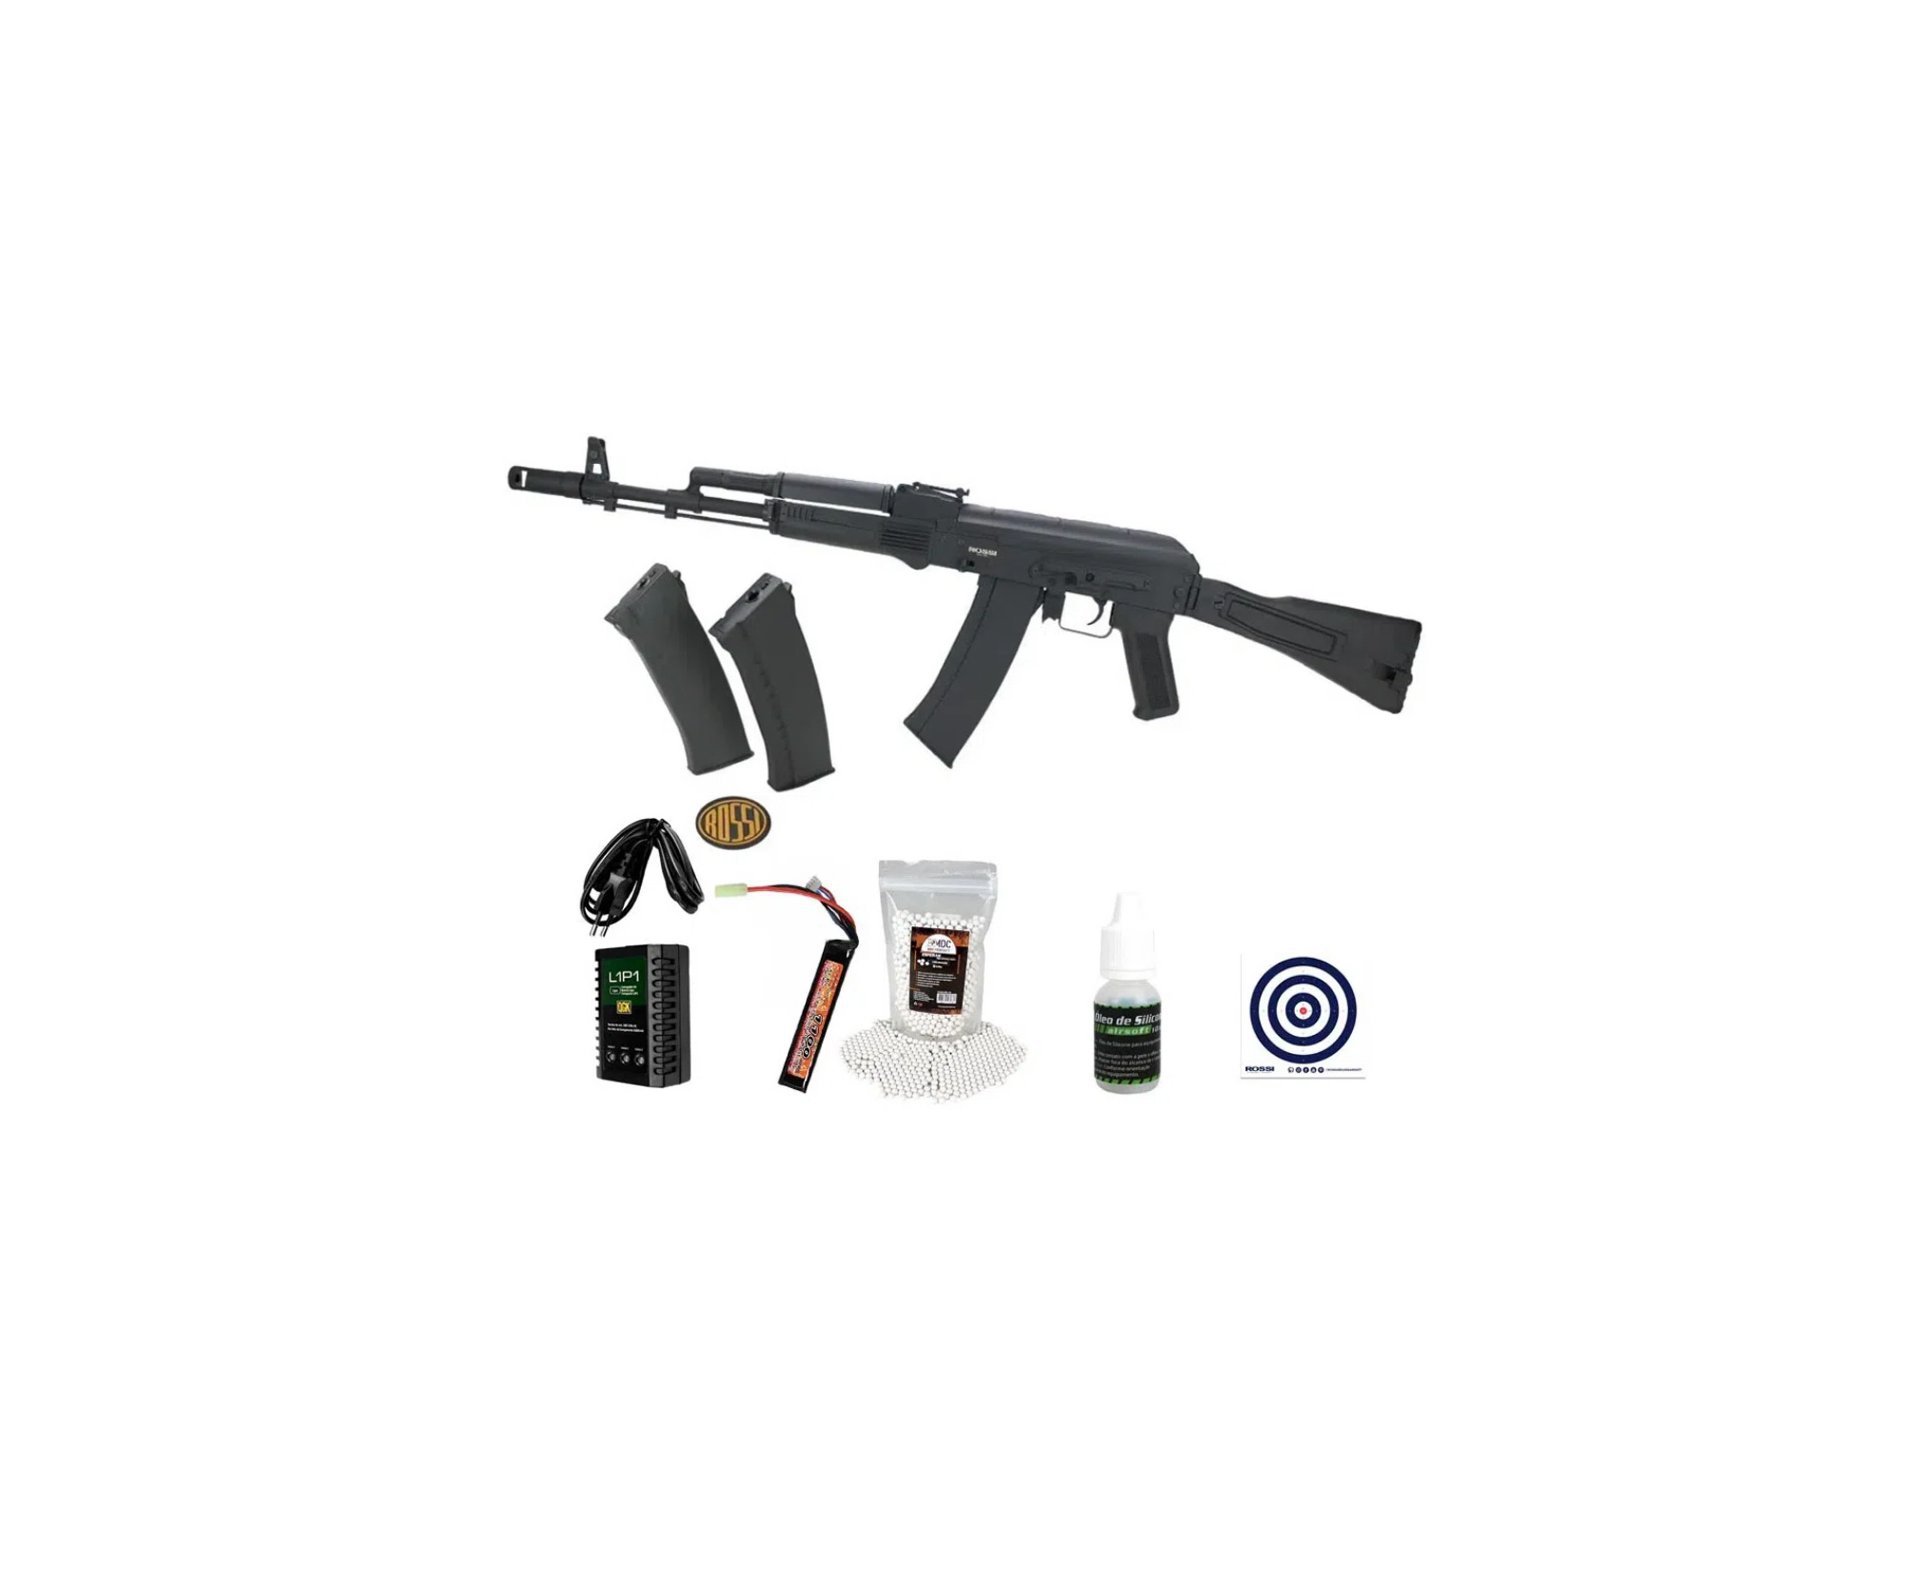 Rifle de Airsoft Neptune AK74 Mosfet Full Metal 6mm - Rossi + Bateria + Carregador + BB'S + Óleo de Silicone + Alvos